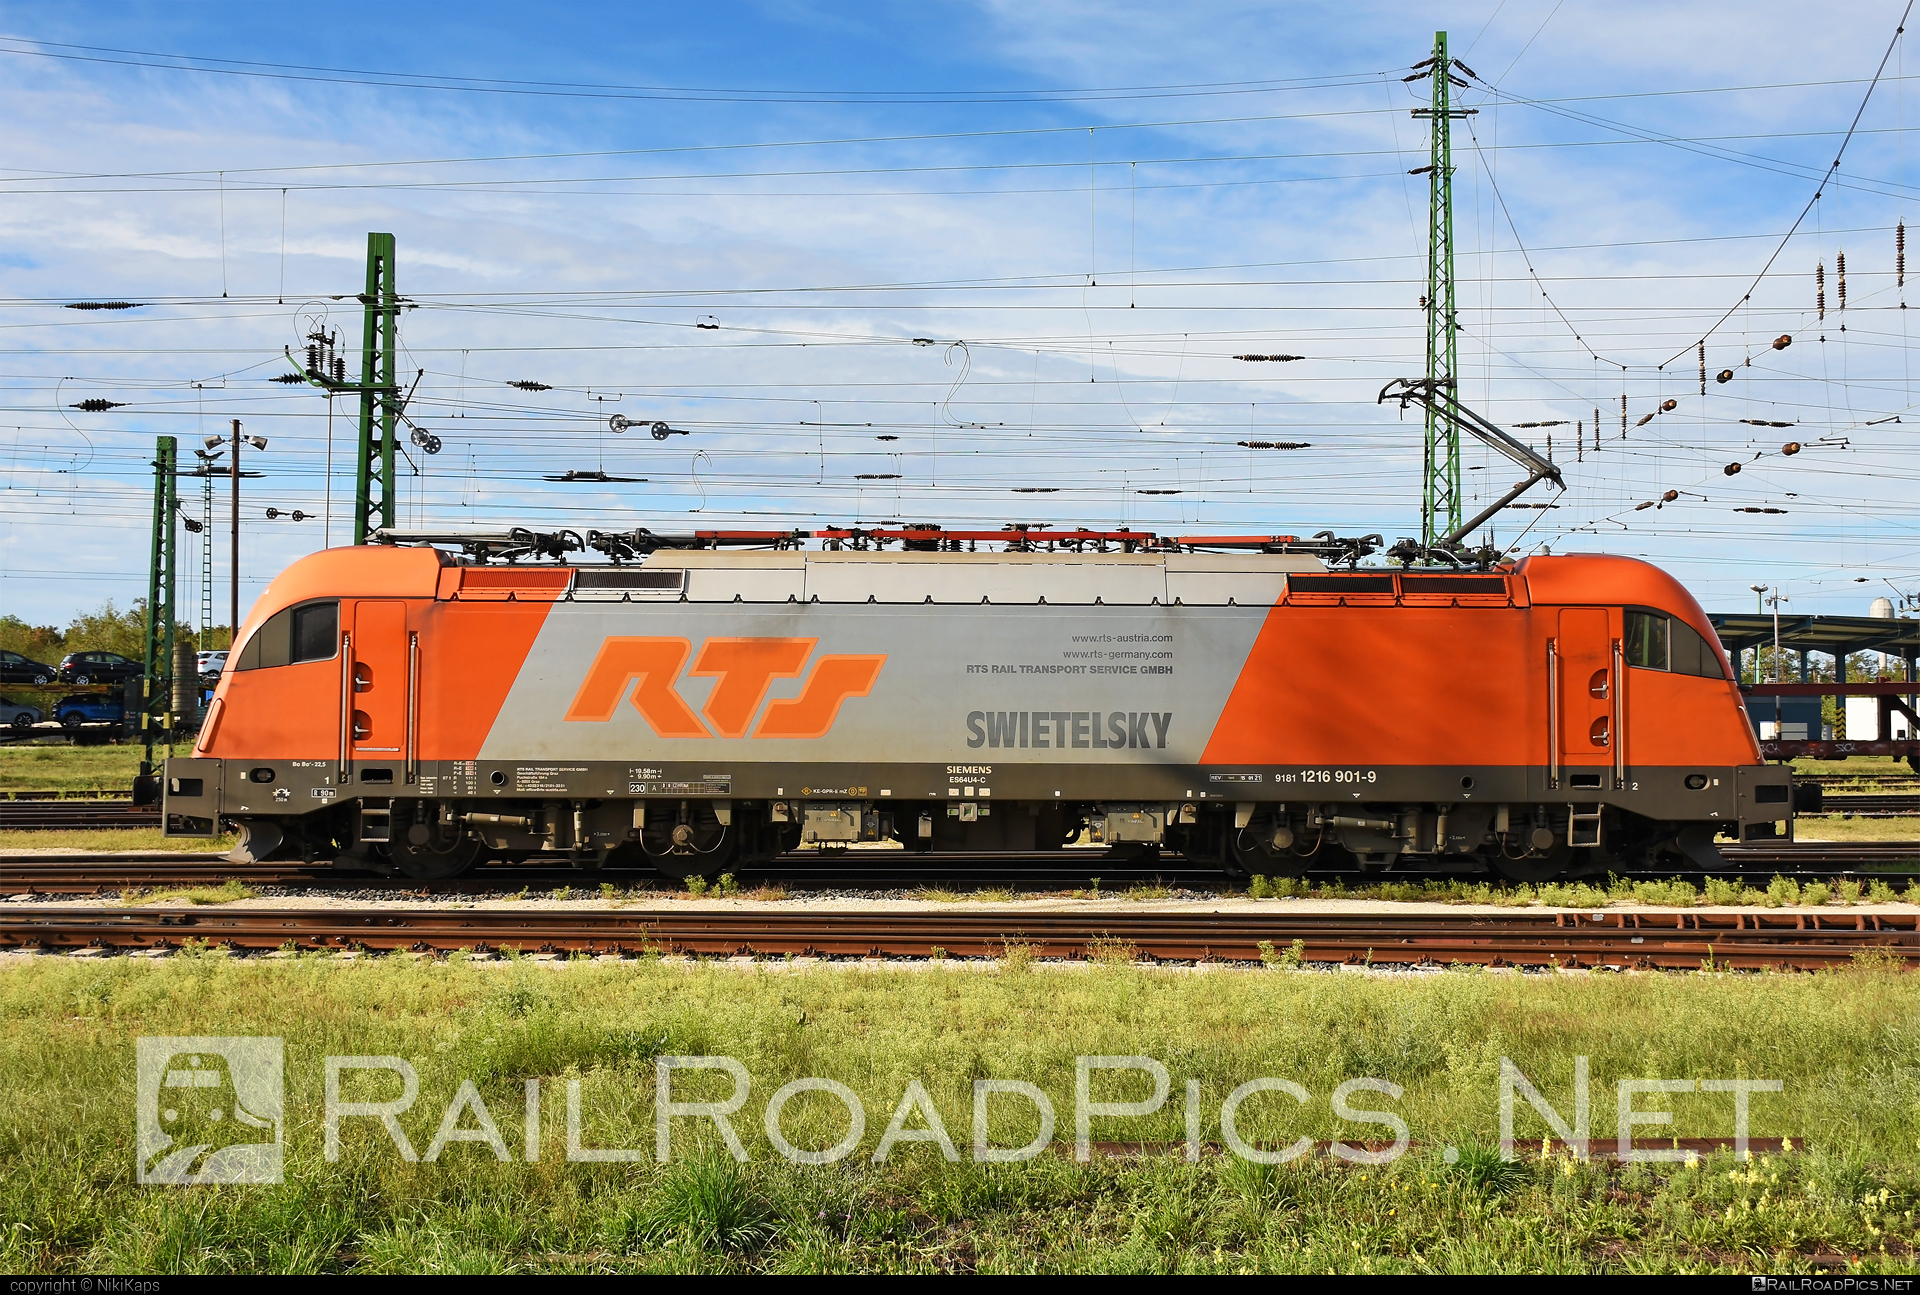 Siemens ES 64 U4 - 1216 901 operated by RTS Rail Transport Service GmbH #es64 #es64u4 #eurosprinter #railtransportservicegmbh #rts #rtsrailtransportservice #siemens #siemensEs64 #siemensEs64u4 #siemenstaurus #swietelsky #taurus #tauruslocomotive